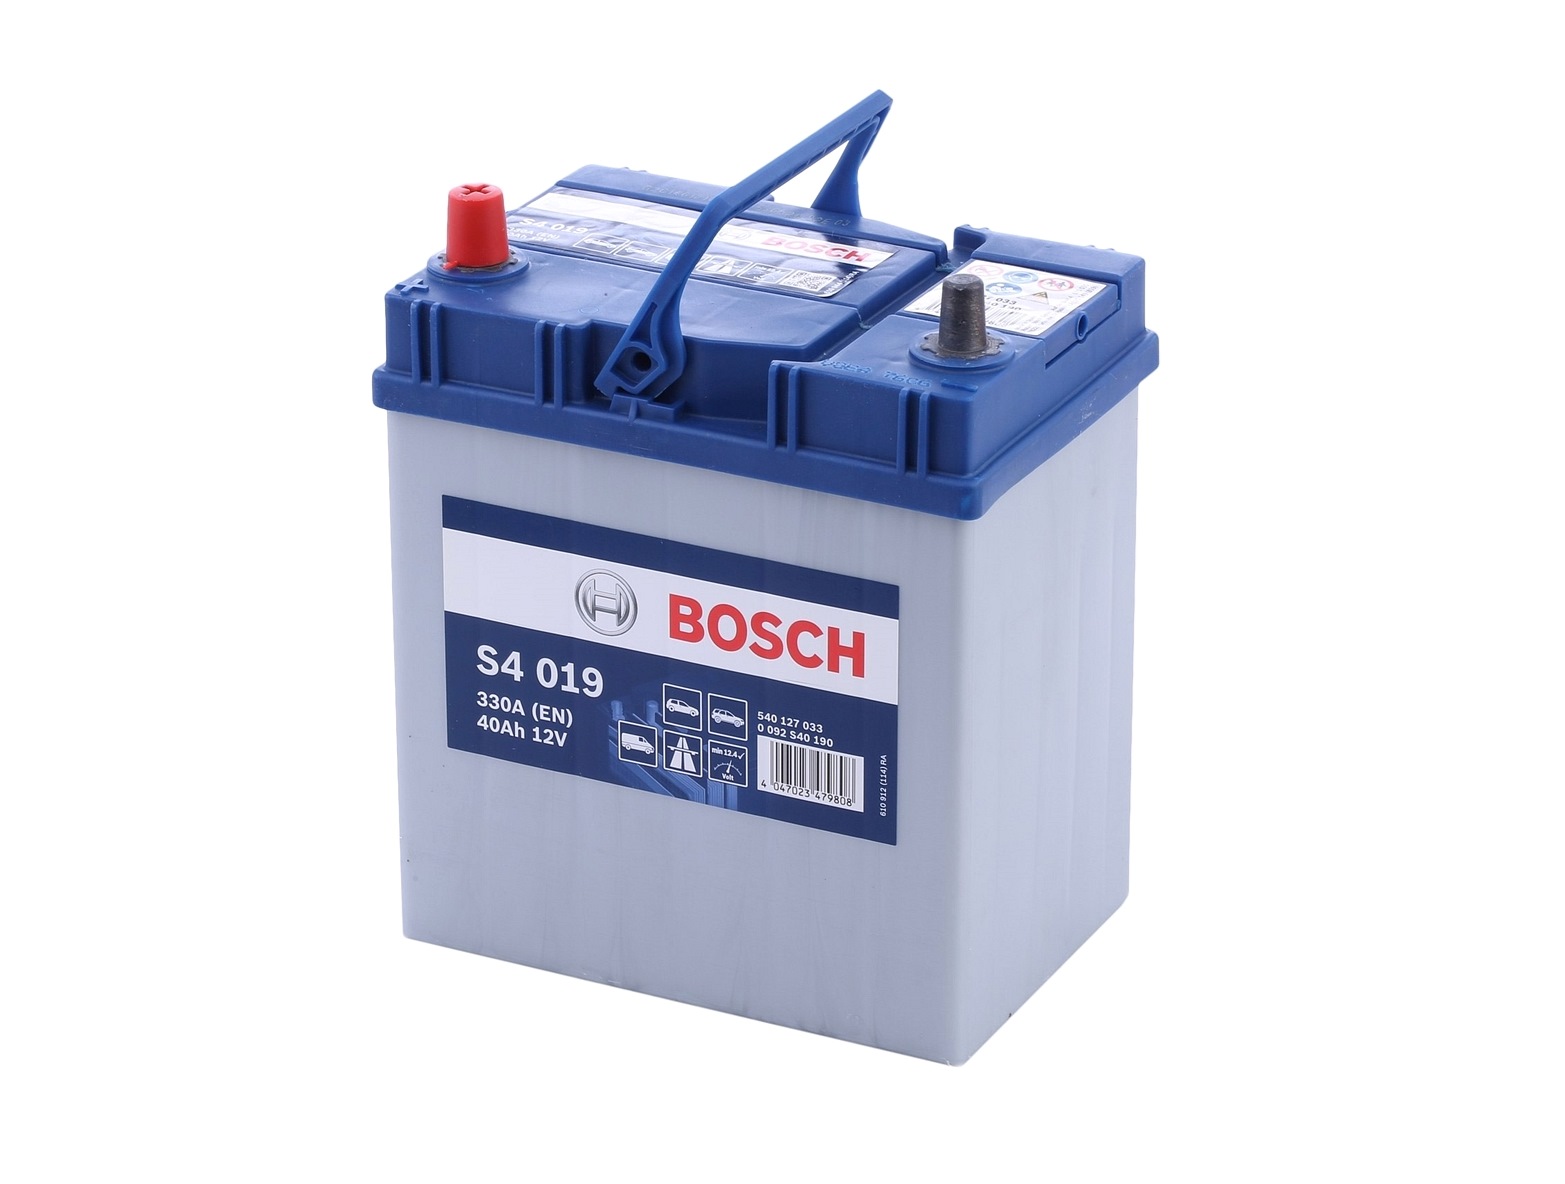 Bosch S4 005 Autobatterie 12V 60Ah 540A inkl. 7,50€ Pfand